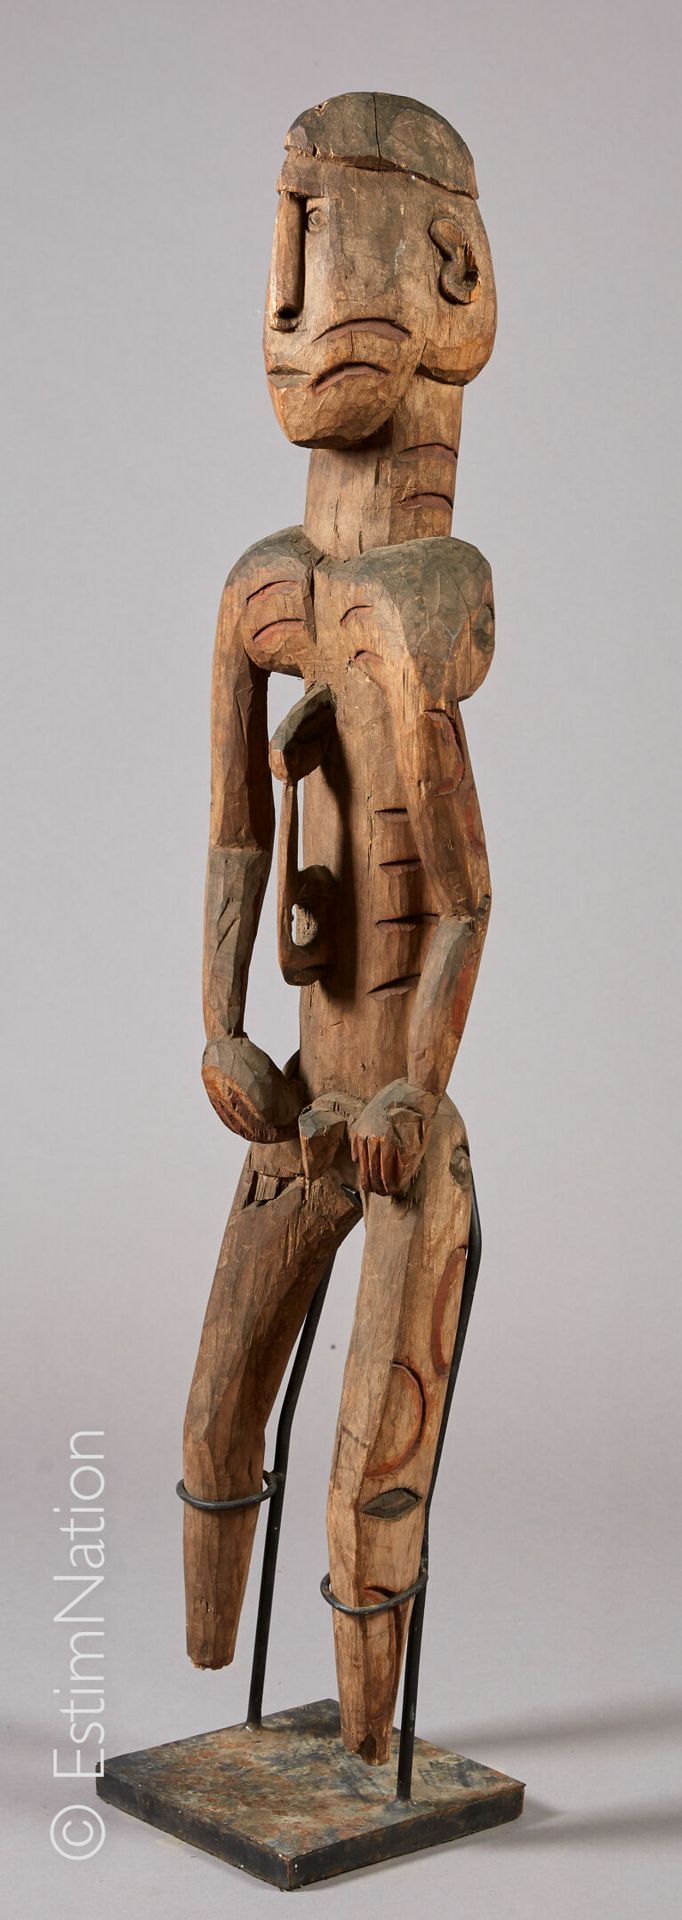 MOYEN SEPIK - PAPOUASIE - NOUVELLE-GUINEE 
中塞皮克-巴布亚新几内亚









雕刻在木头上的伤痕累累的祖先形&hellip;